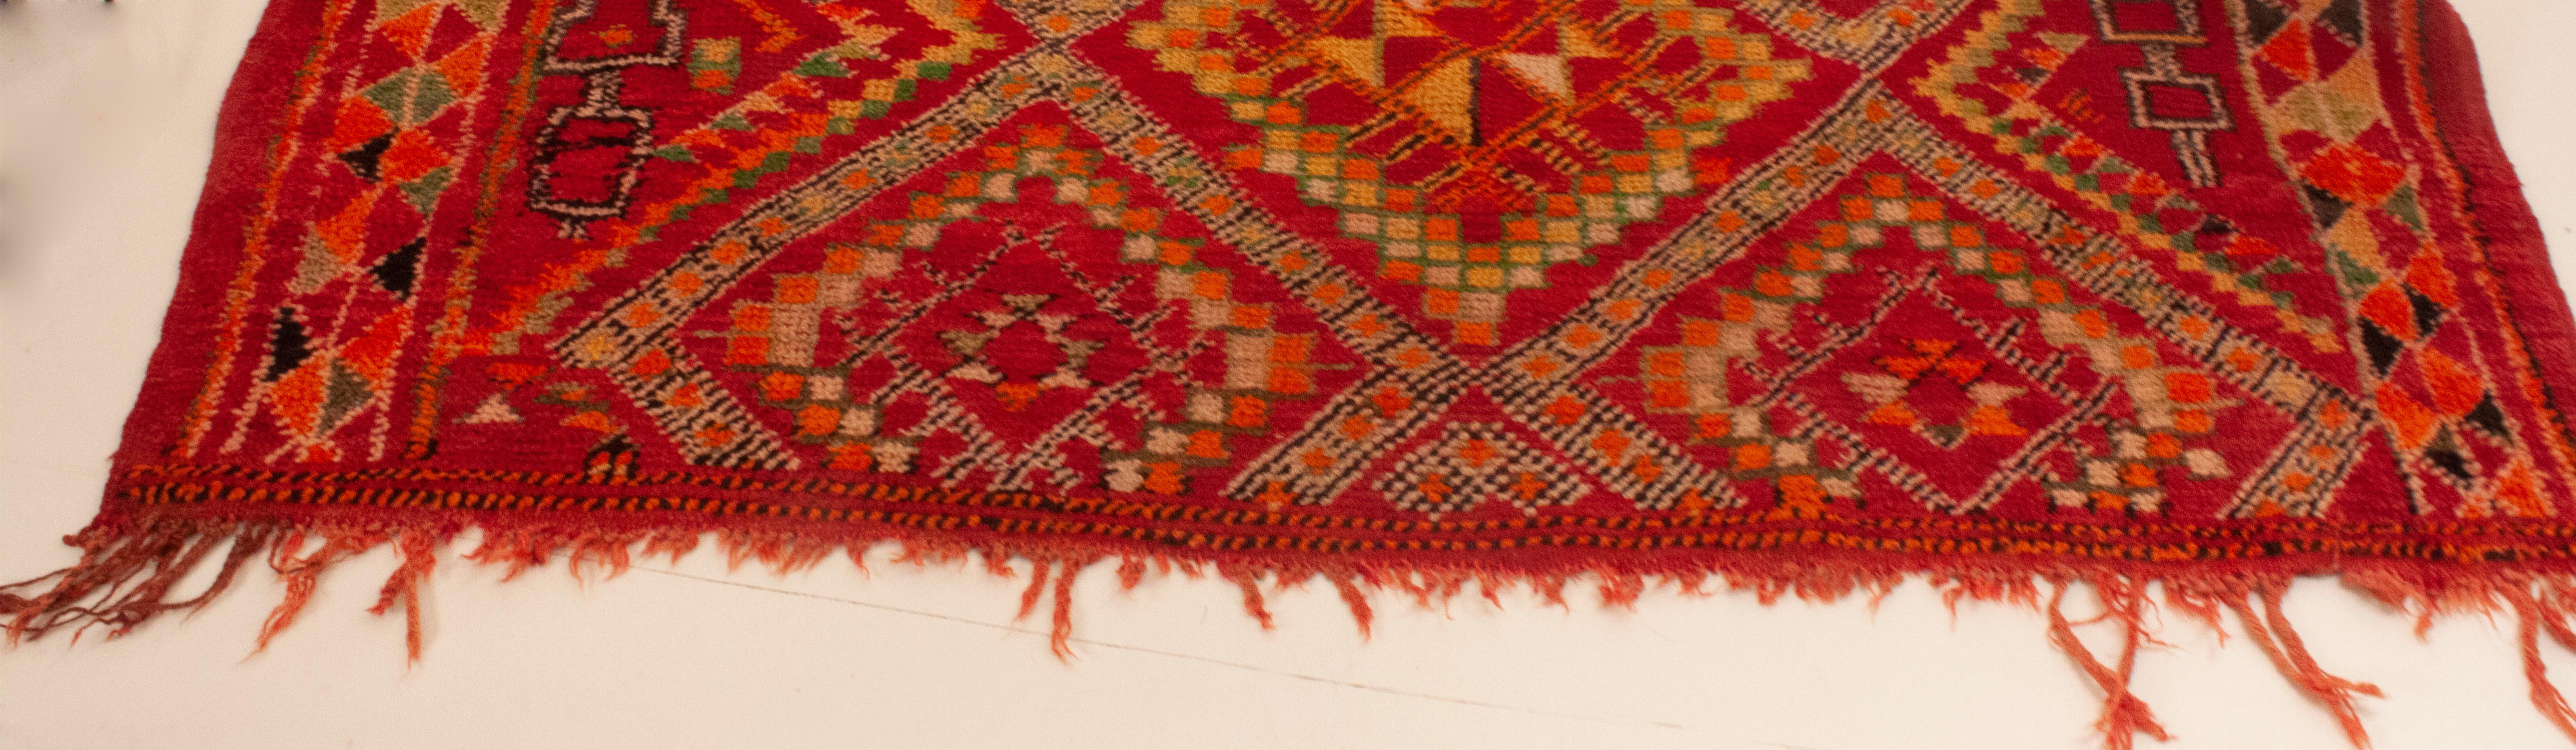 Vintage Colorful Moroccan Carpet For Sale 8